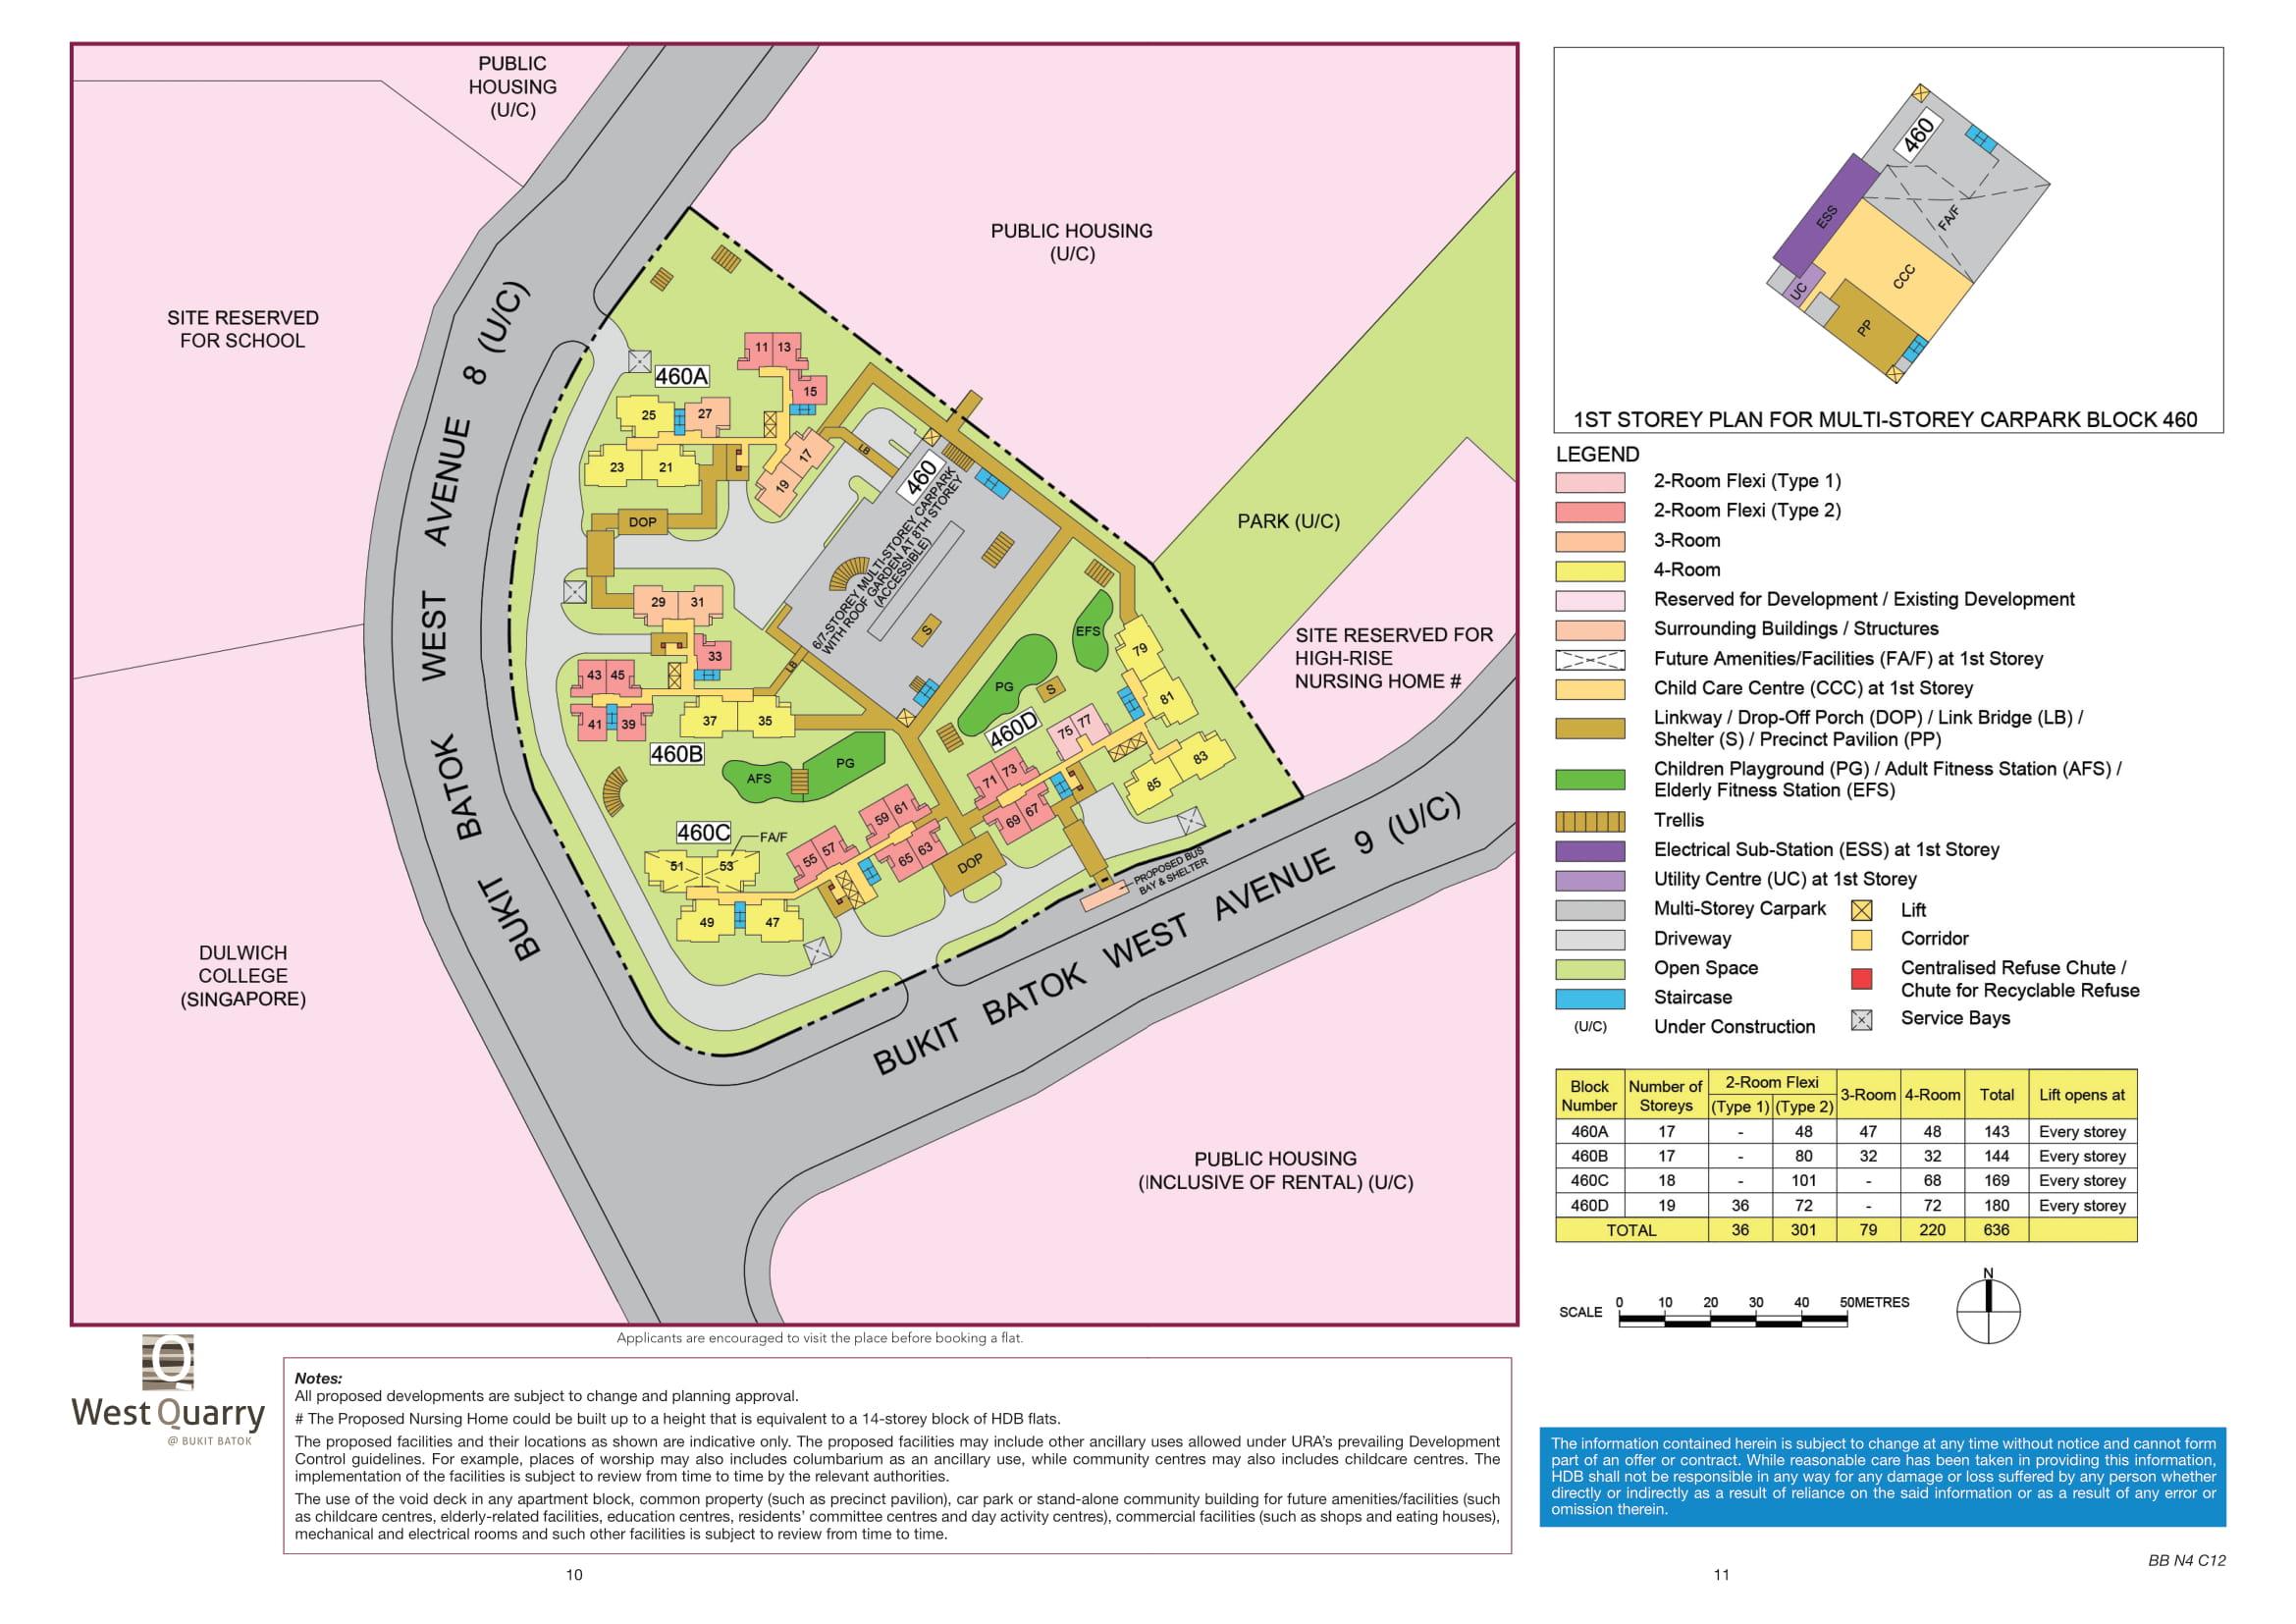 West Quarry @ Bukit Batok Site Plan